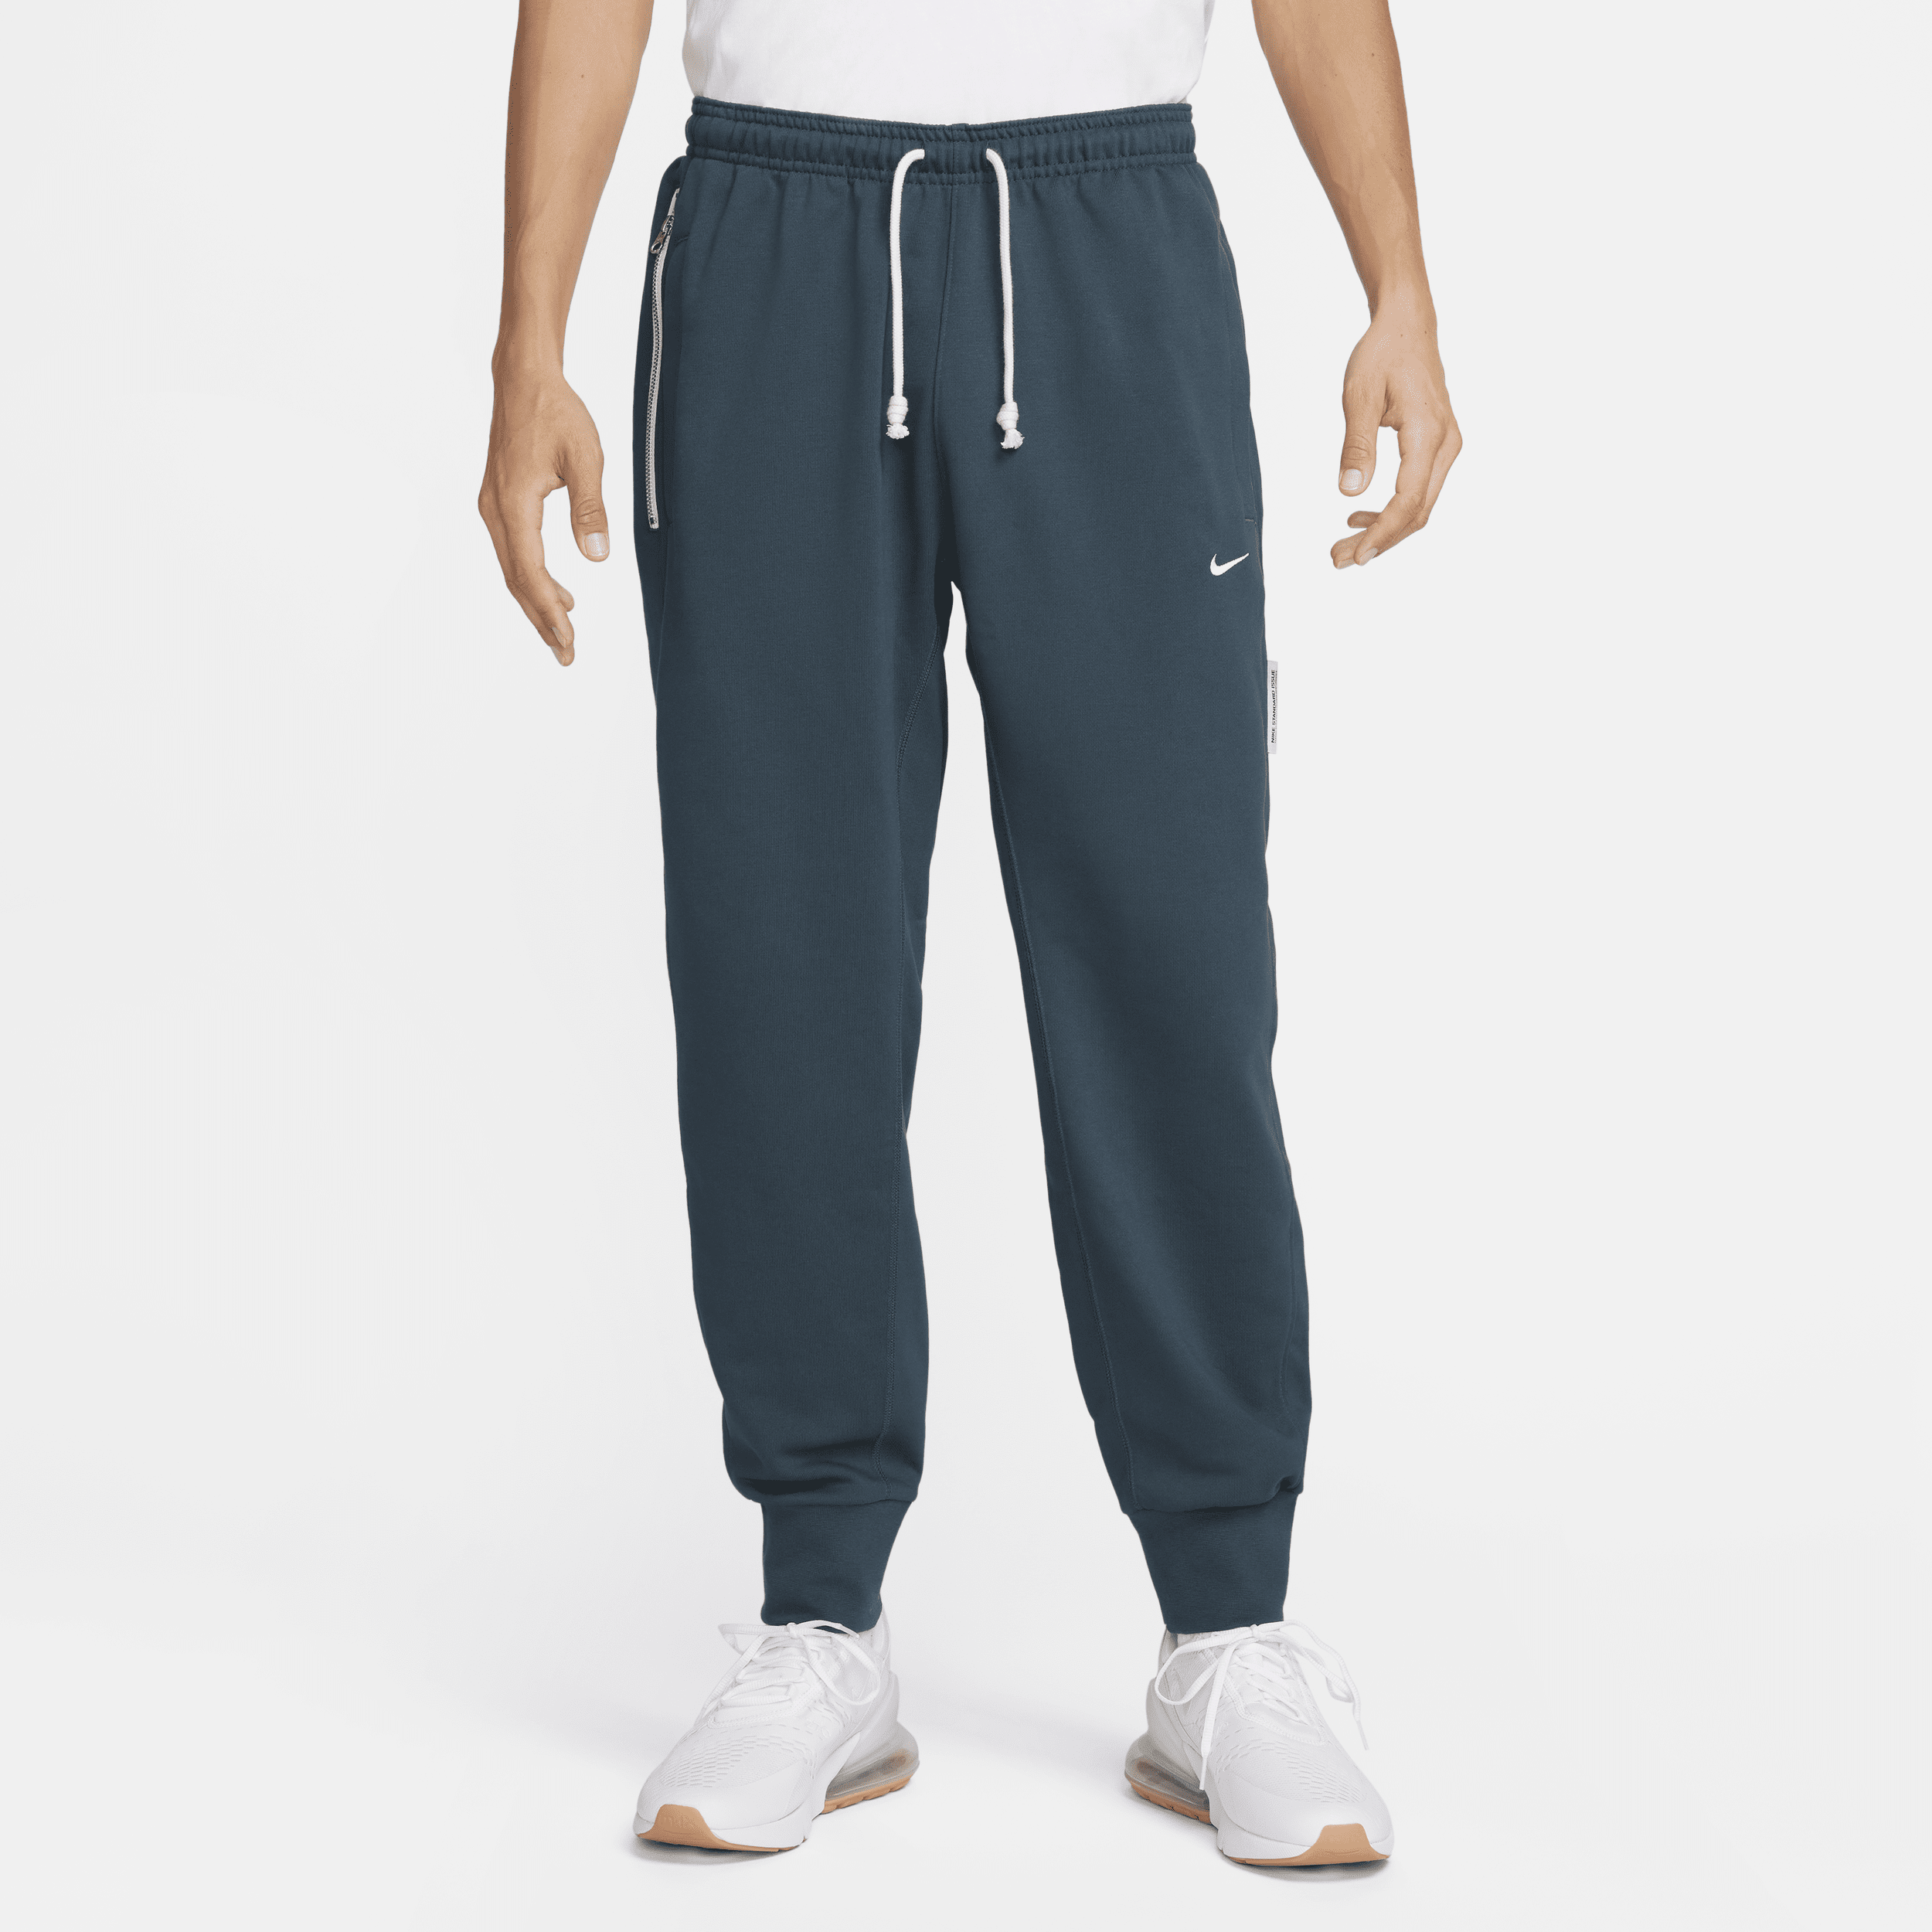 Nike Men's Standard Issue Dri-fit Soccer Pants In Green